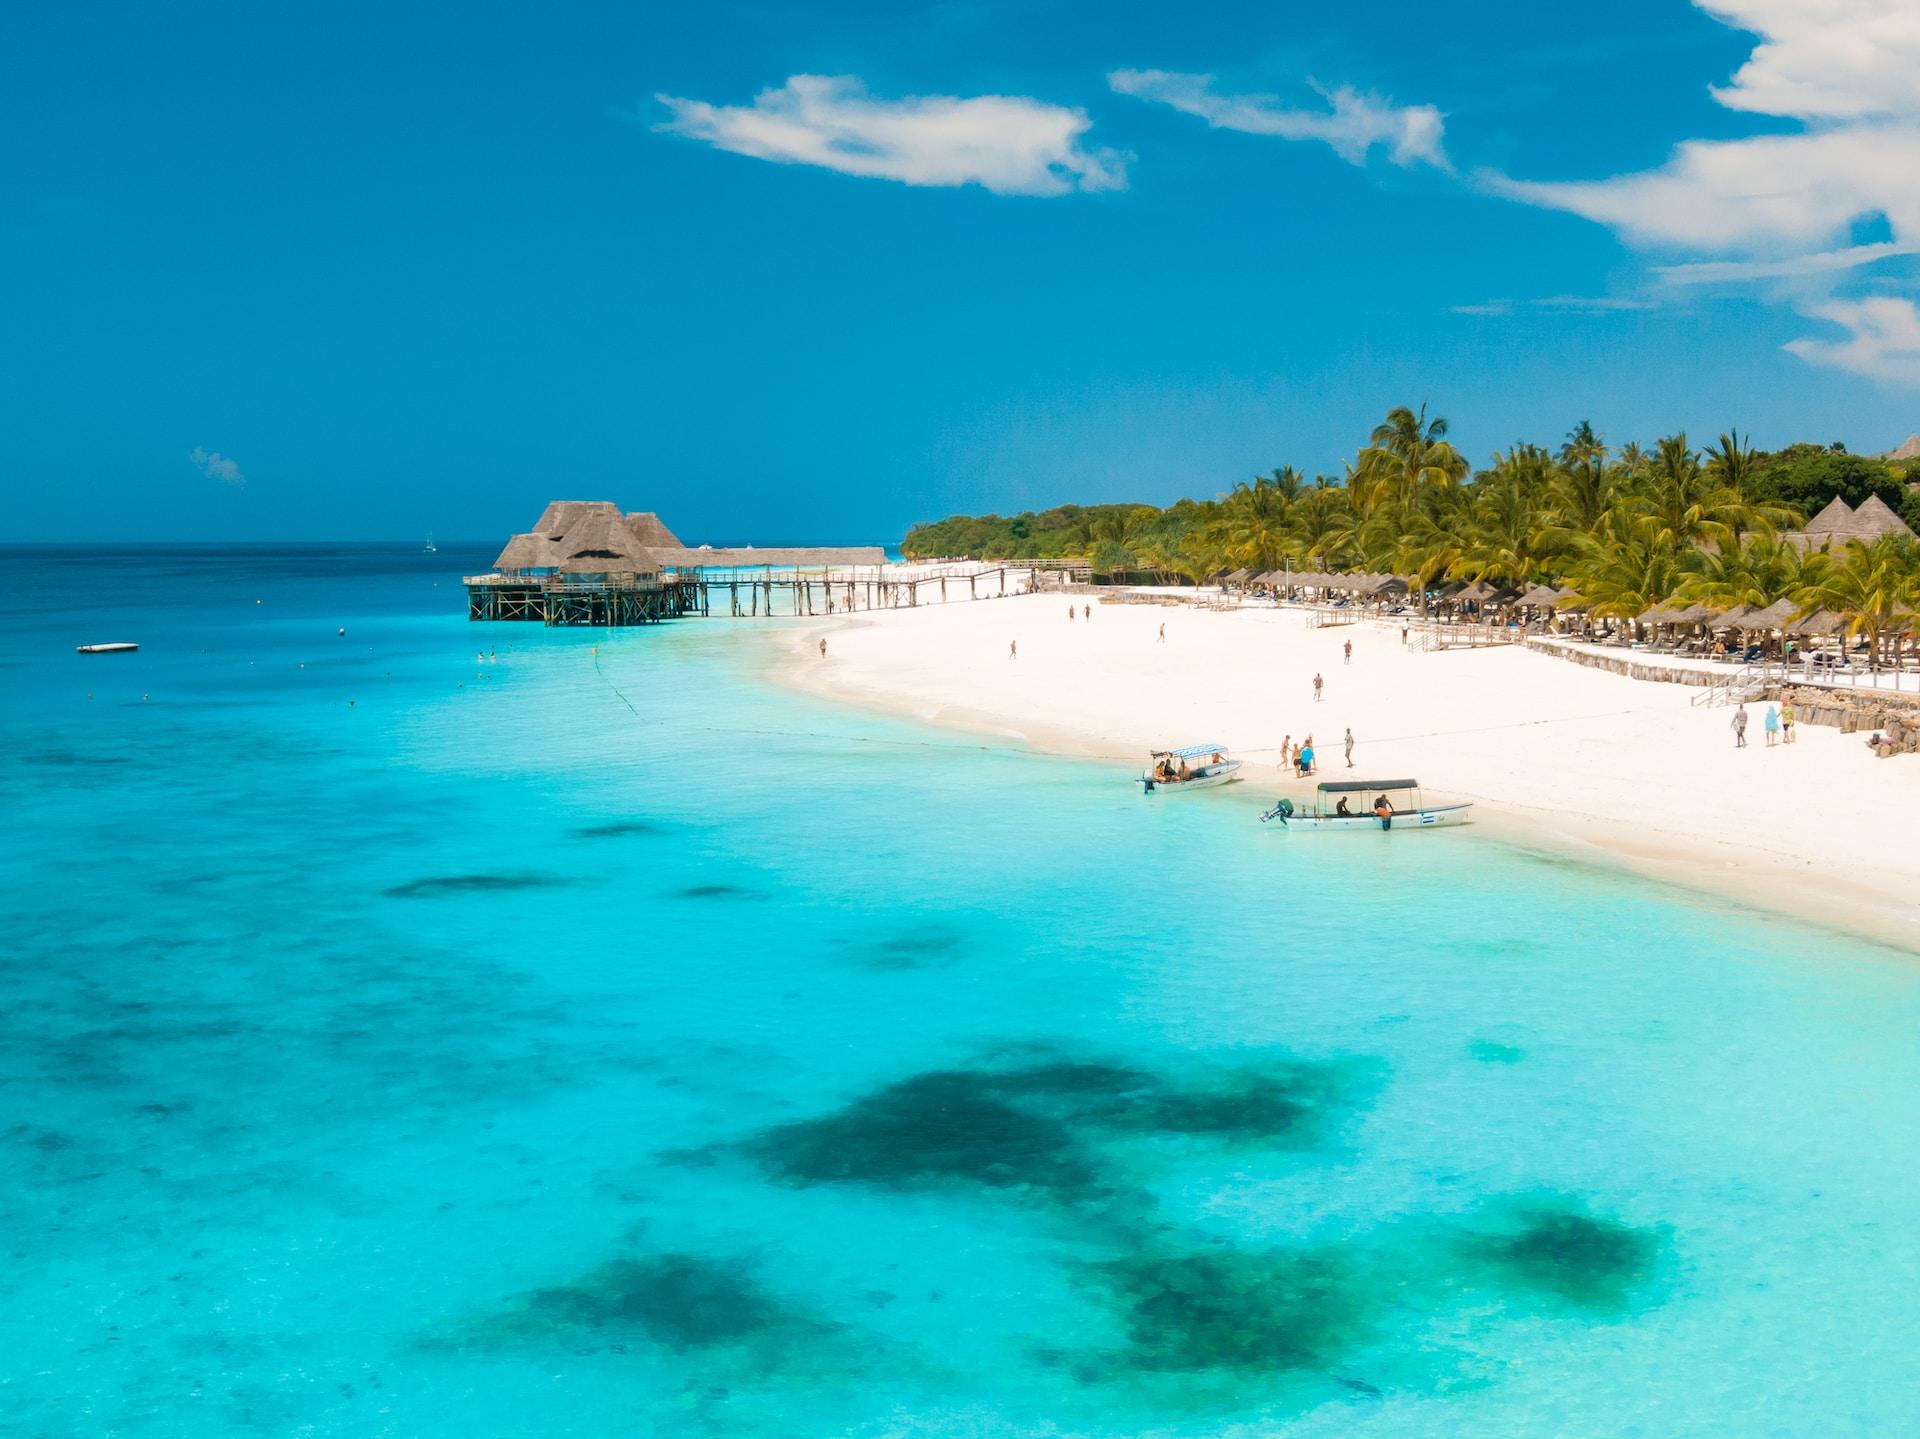 Zanzibar: white beach with palm trees and a gazebo on the sea.